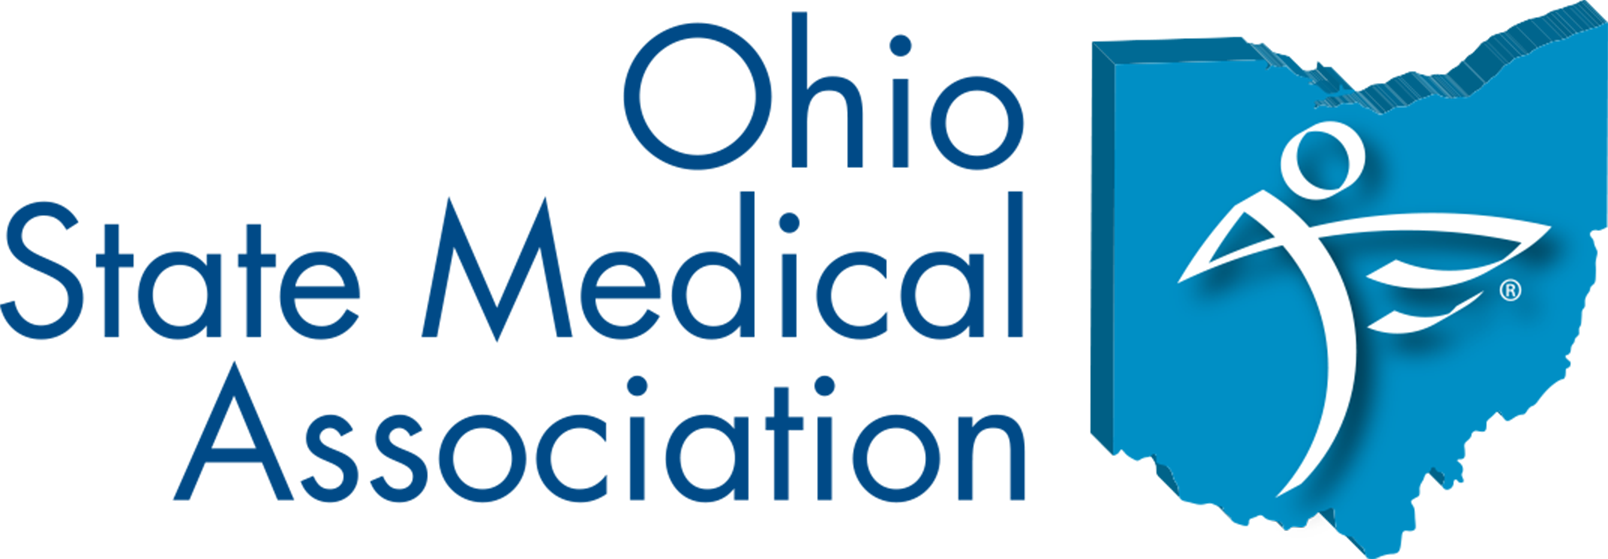 Ohio State Medical Association logo